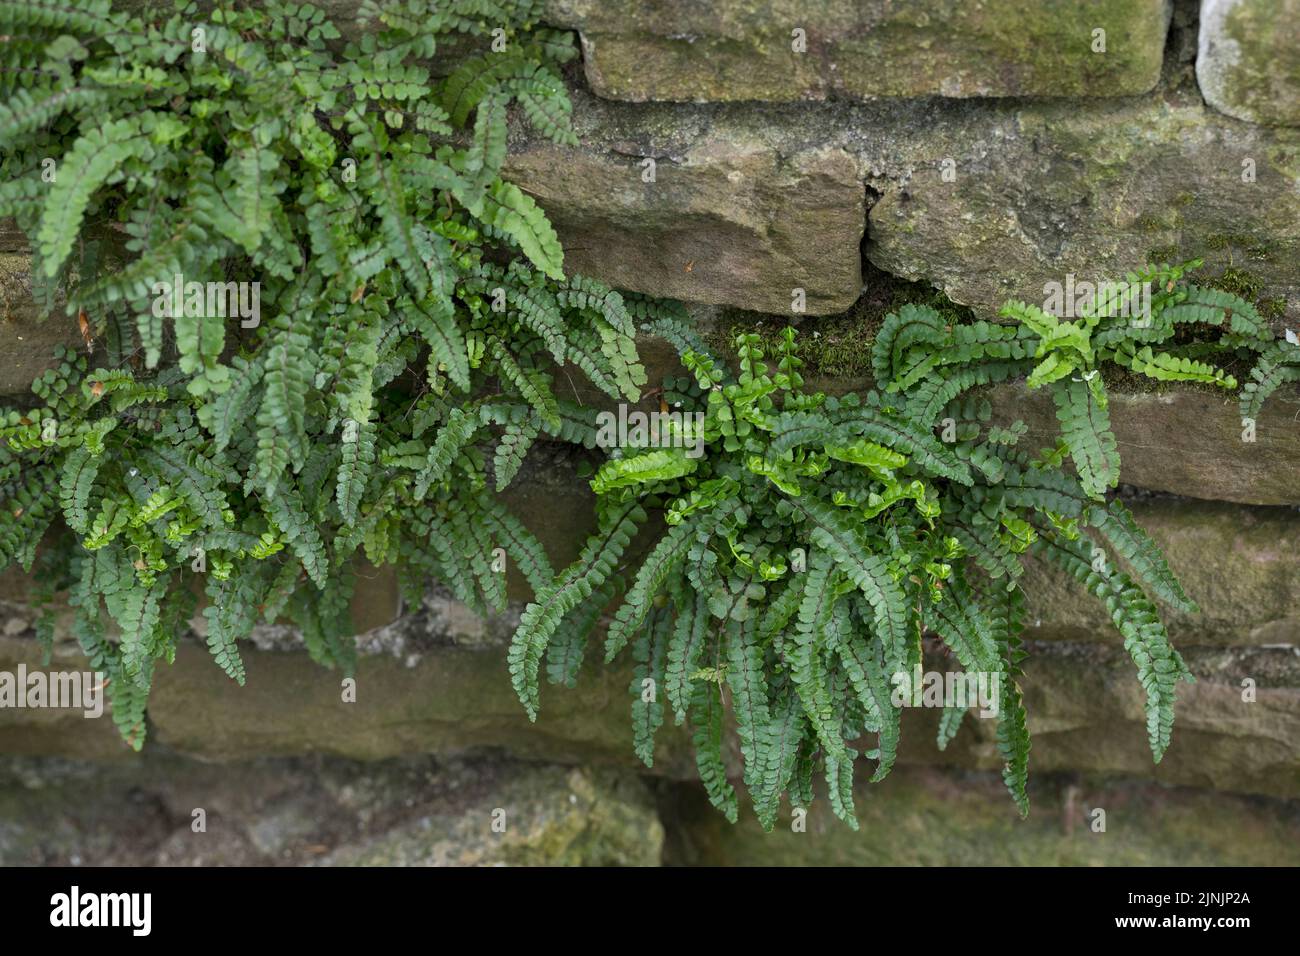 Maidenhair spleenwort, Common maidenhair (Asplenium trichomanes), on an old stone dry wall, Germany Stock Photo